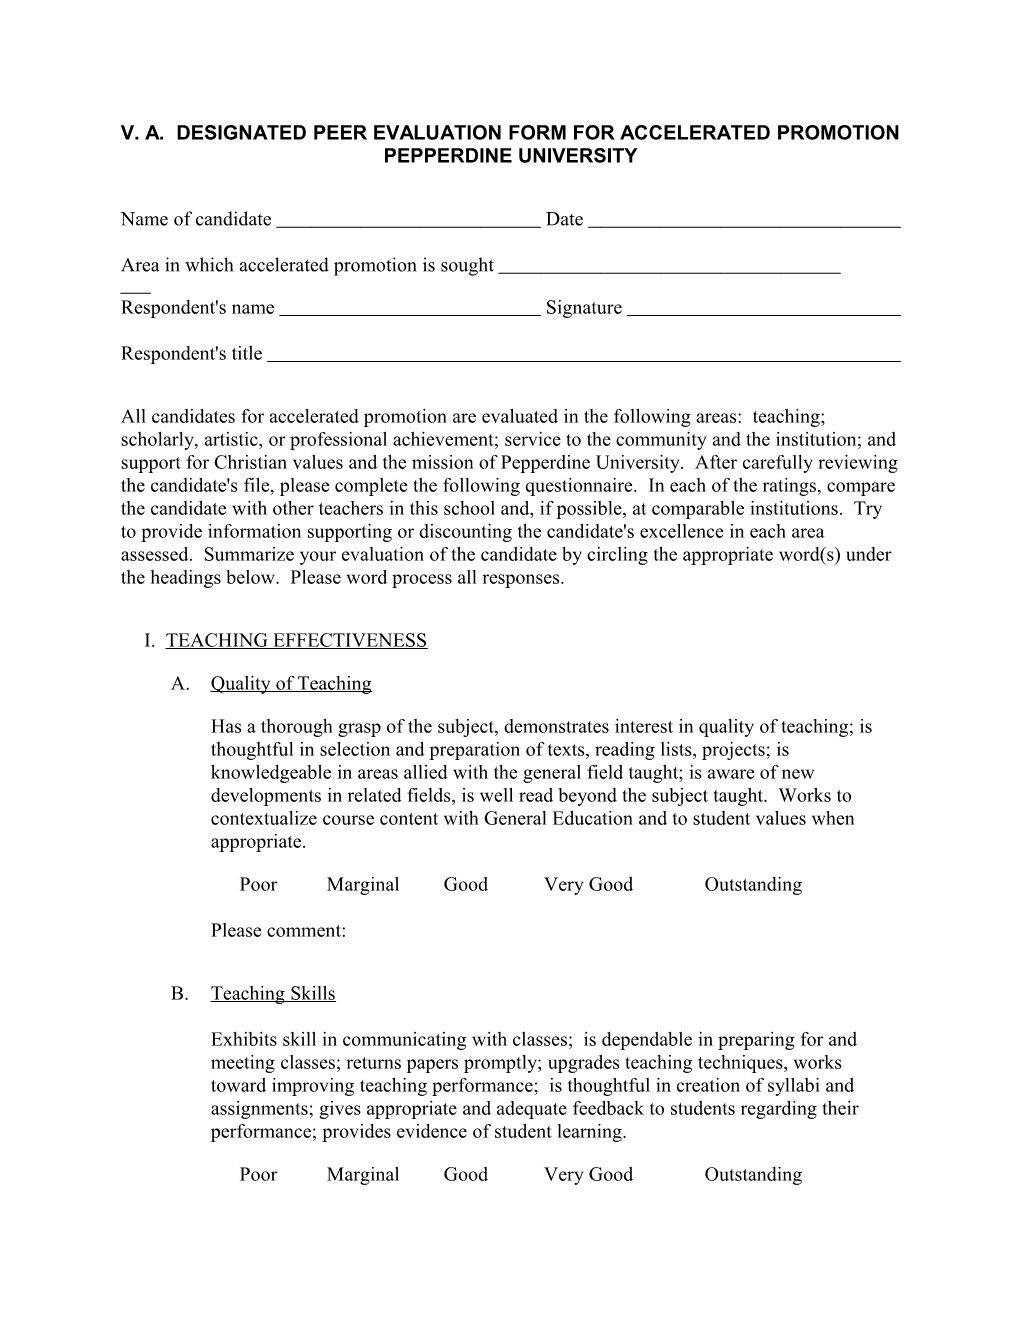 V. A. Designated Peer Evaluation Form for Accelerated Promotion